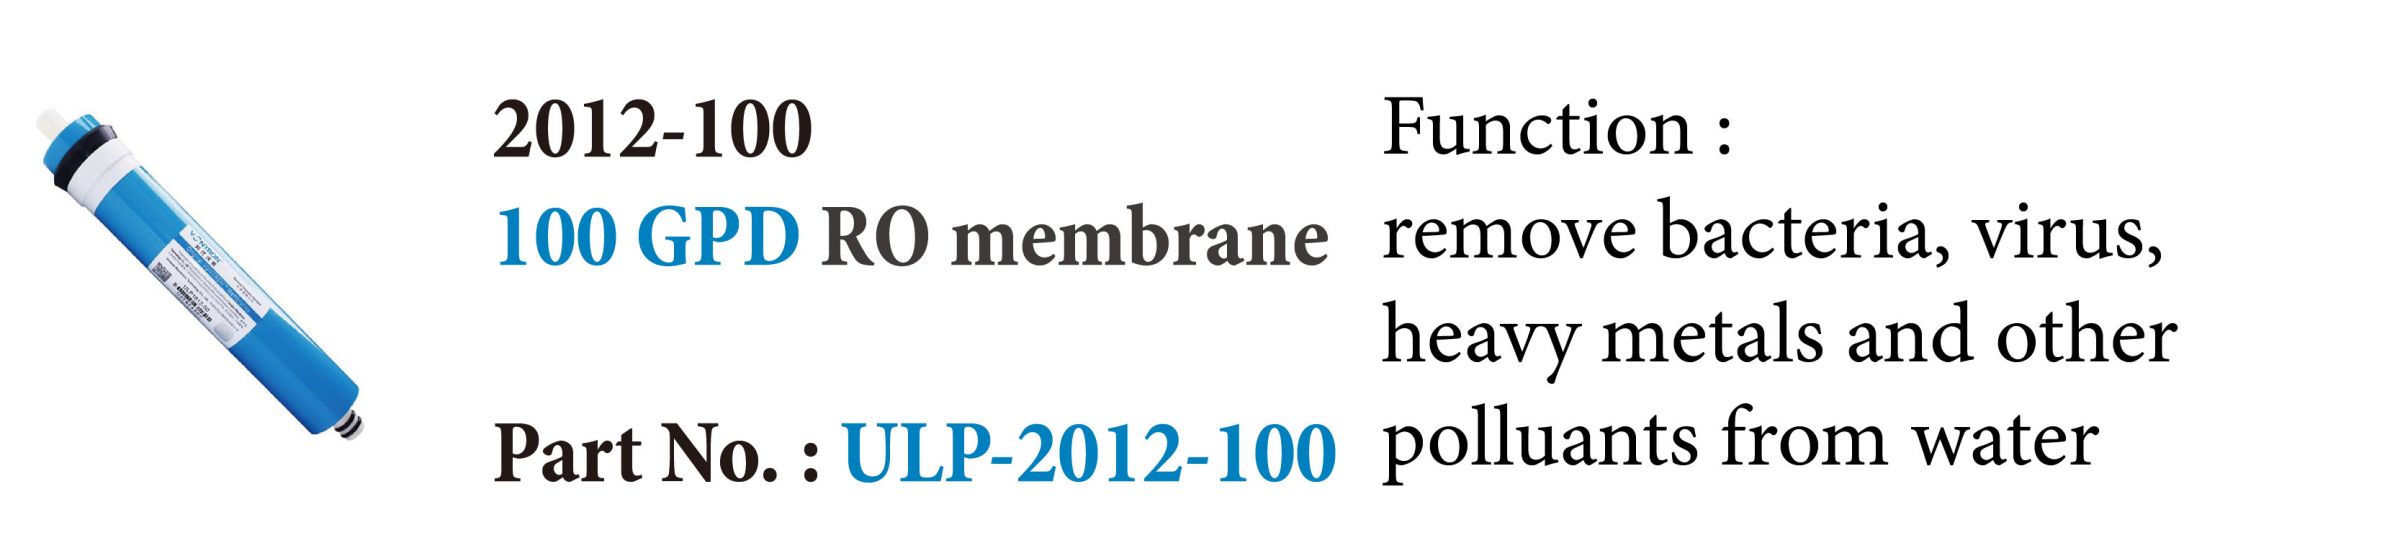 ULP-2012-100 Residential 100 GPD RO Membrane